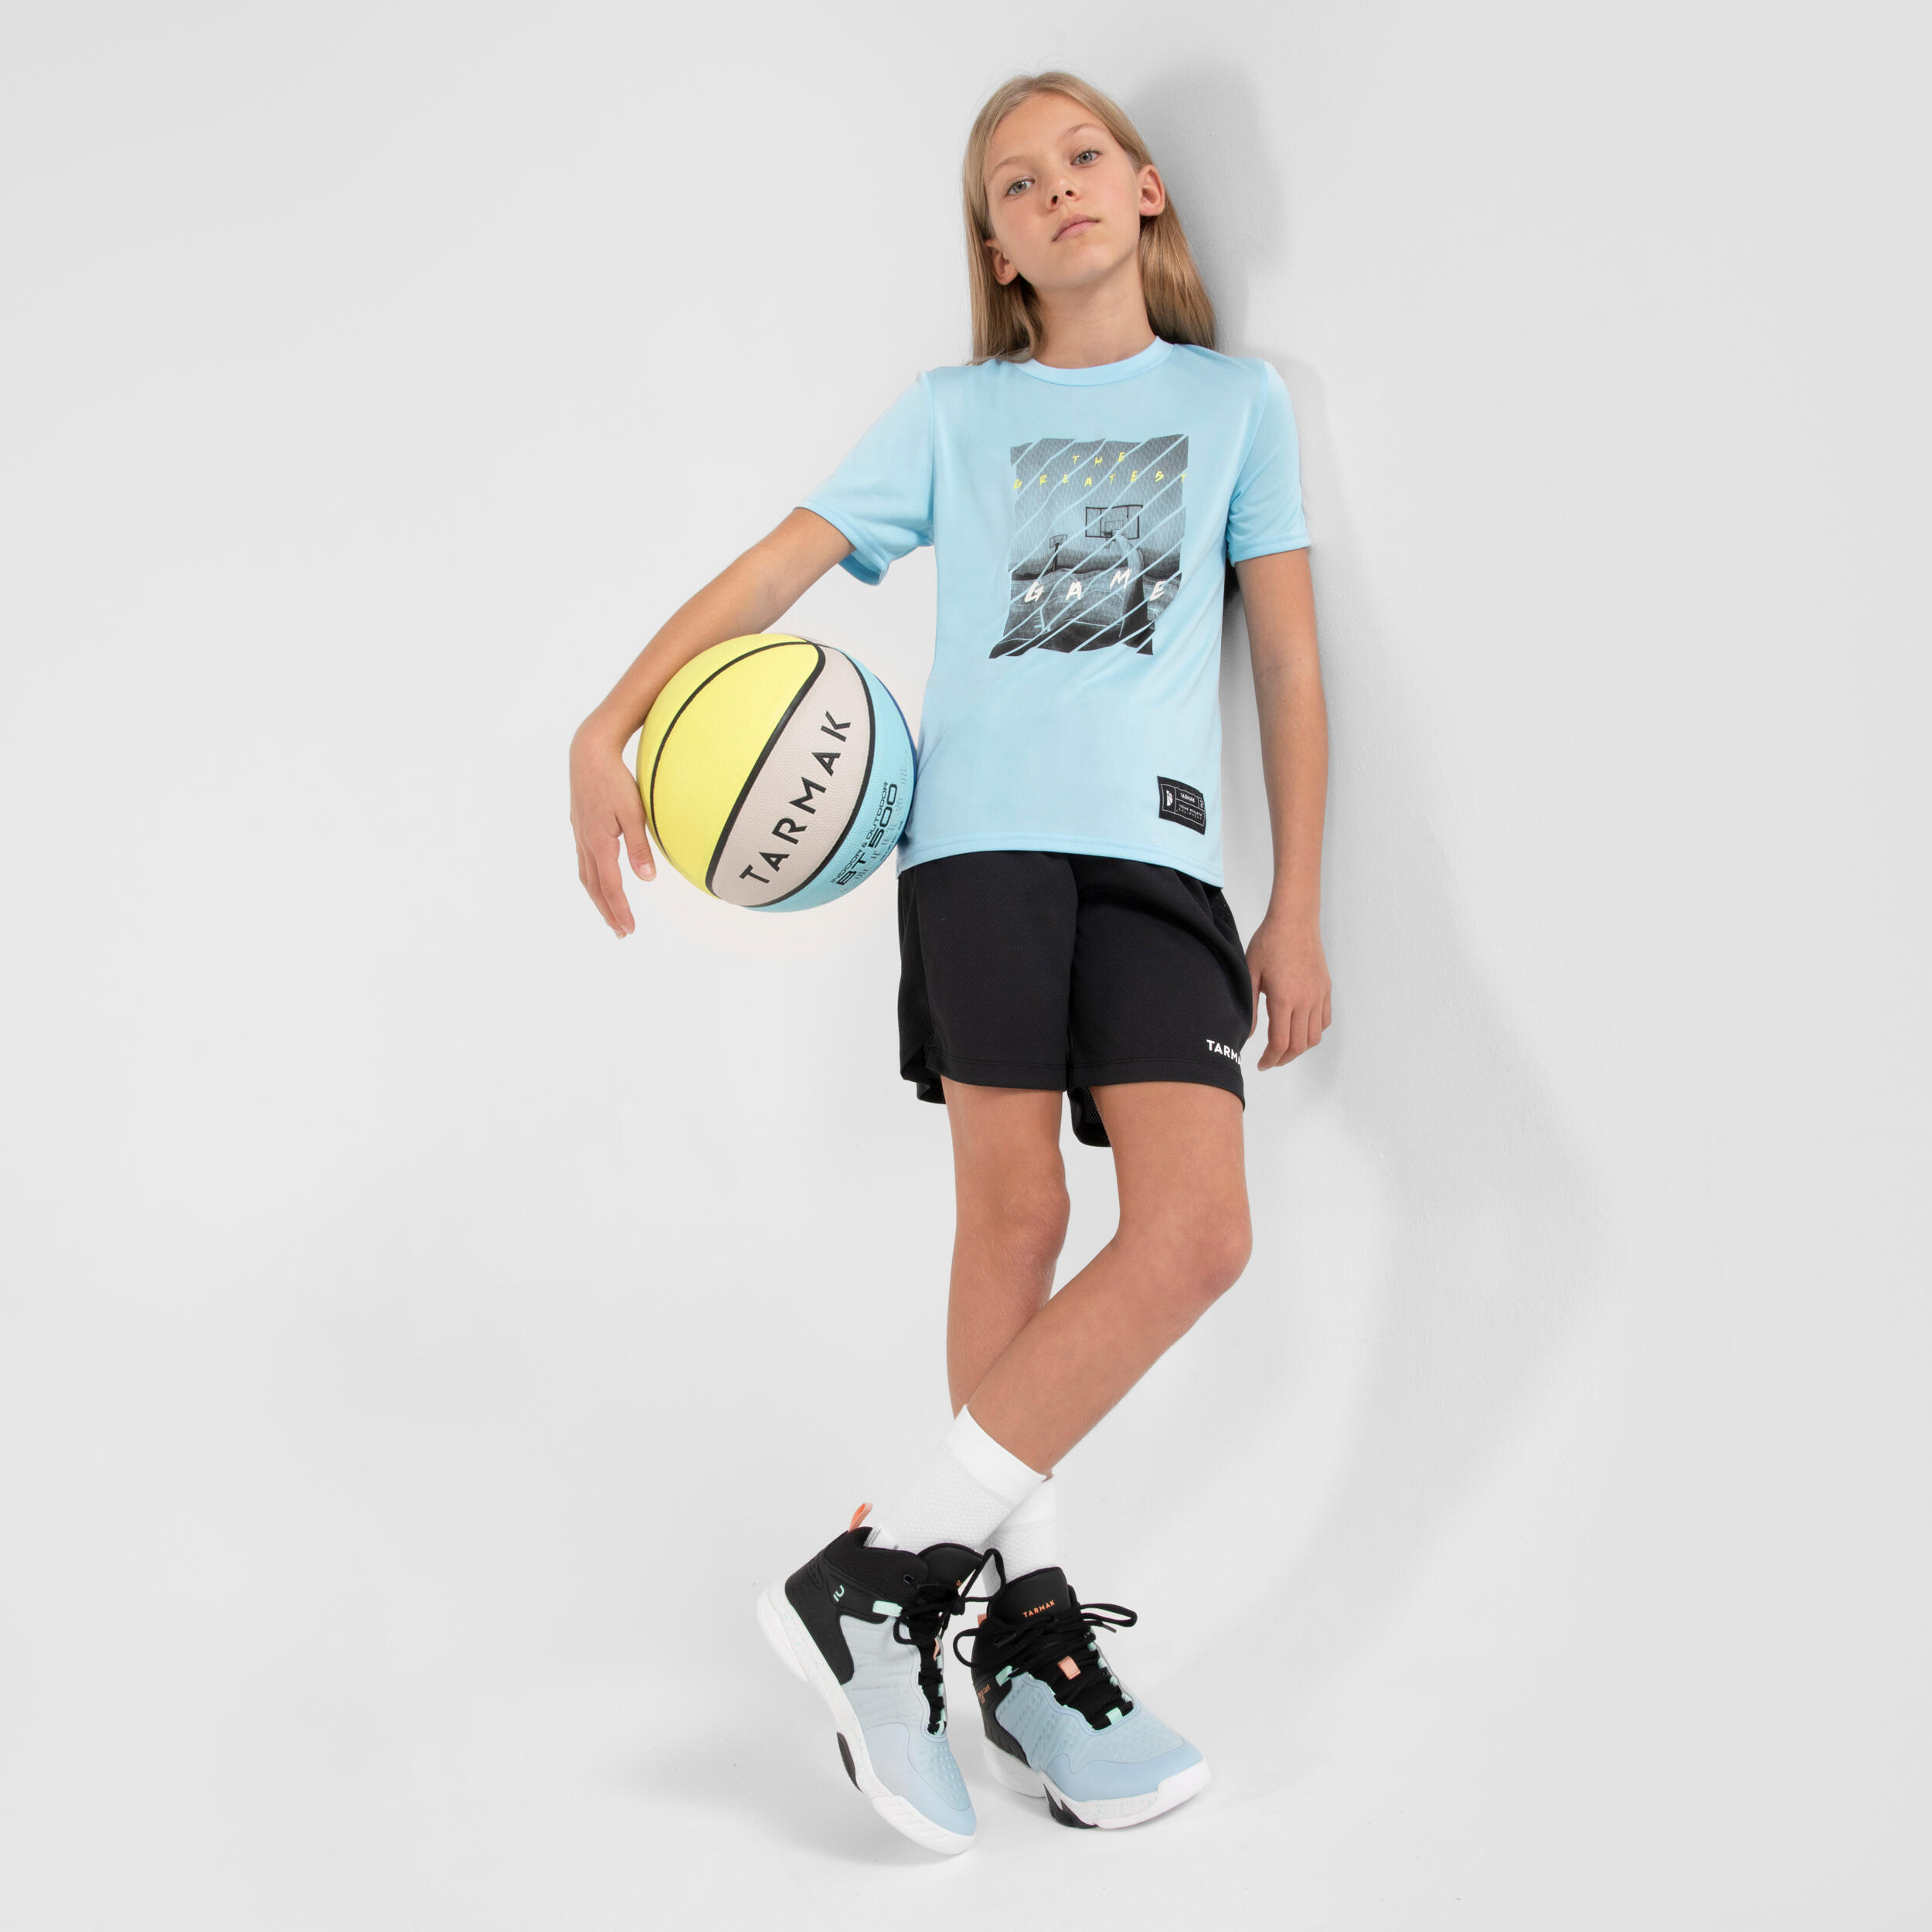 Kids' Basketball T-Shirt / Jersey TS500 Fast - Blue 4/6